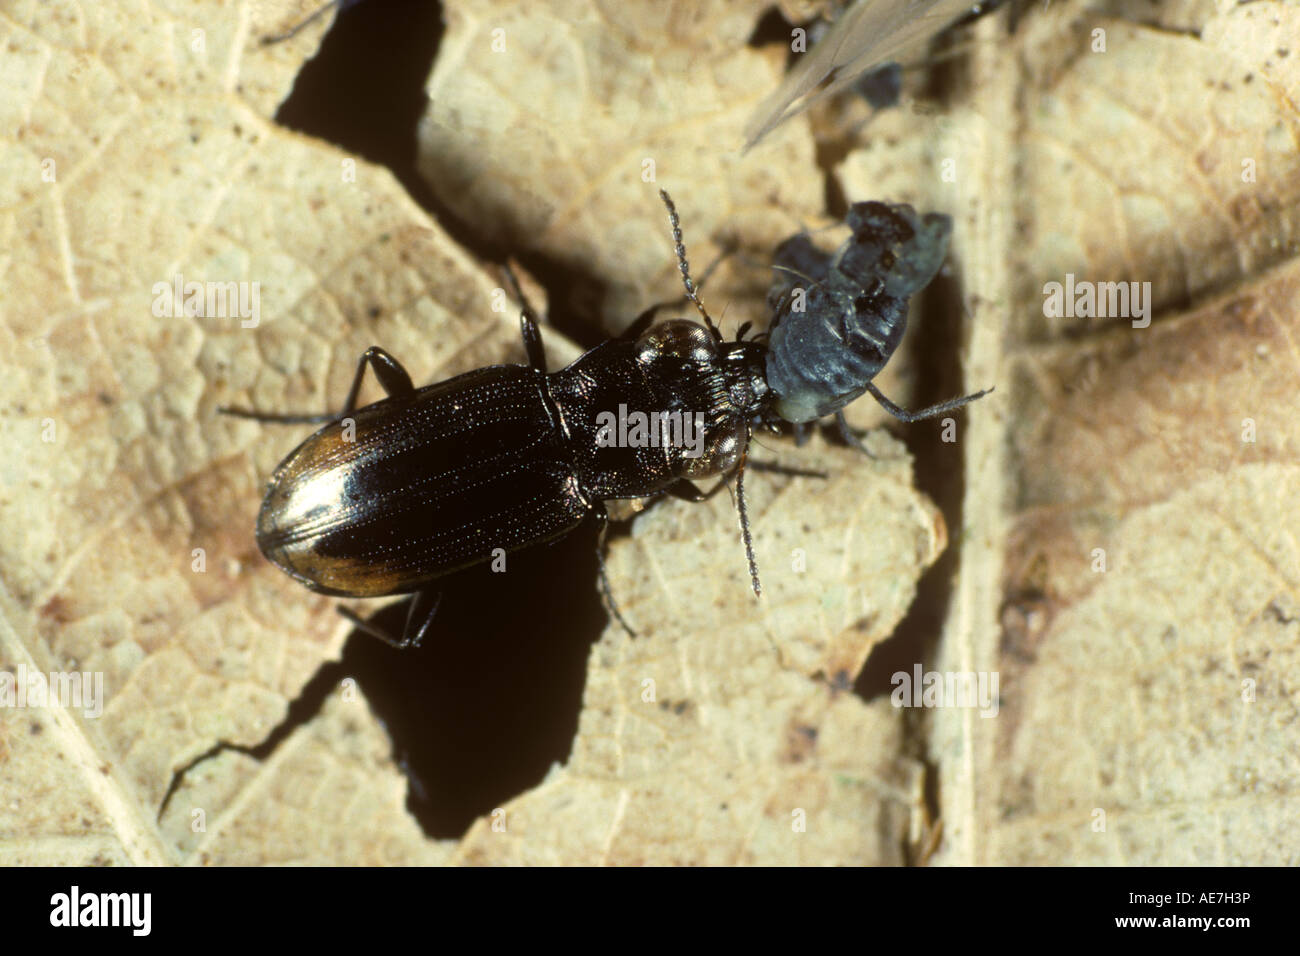 Predatory ground beetle Notiophilus biguttatus attacking black bean aphid Aphis fabae Stock Photo